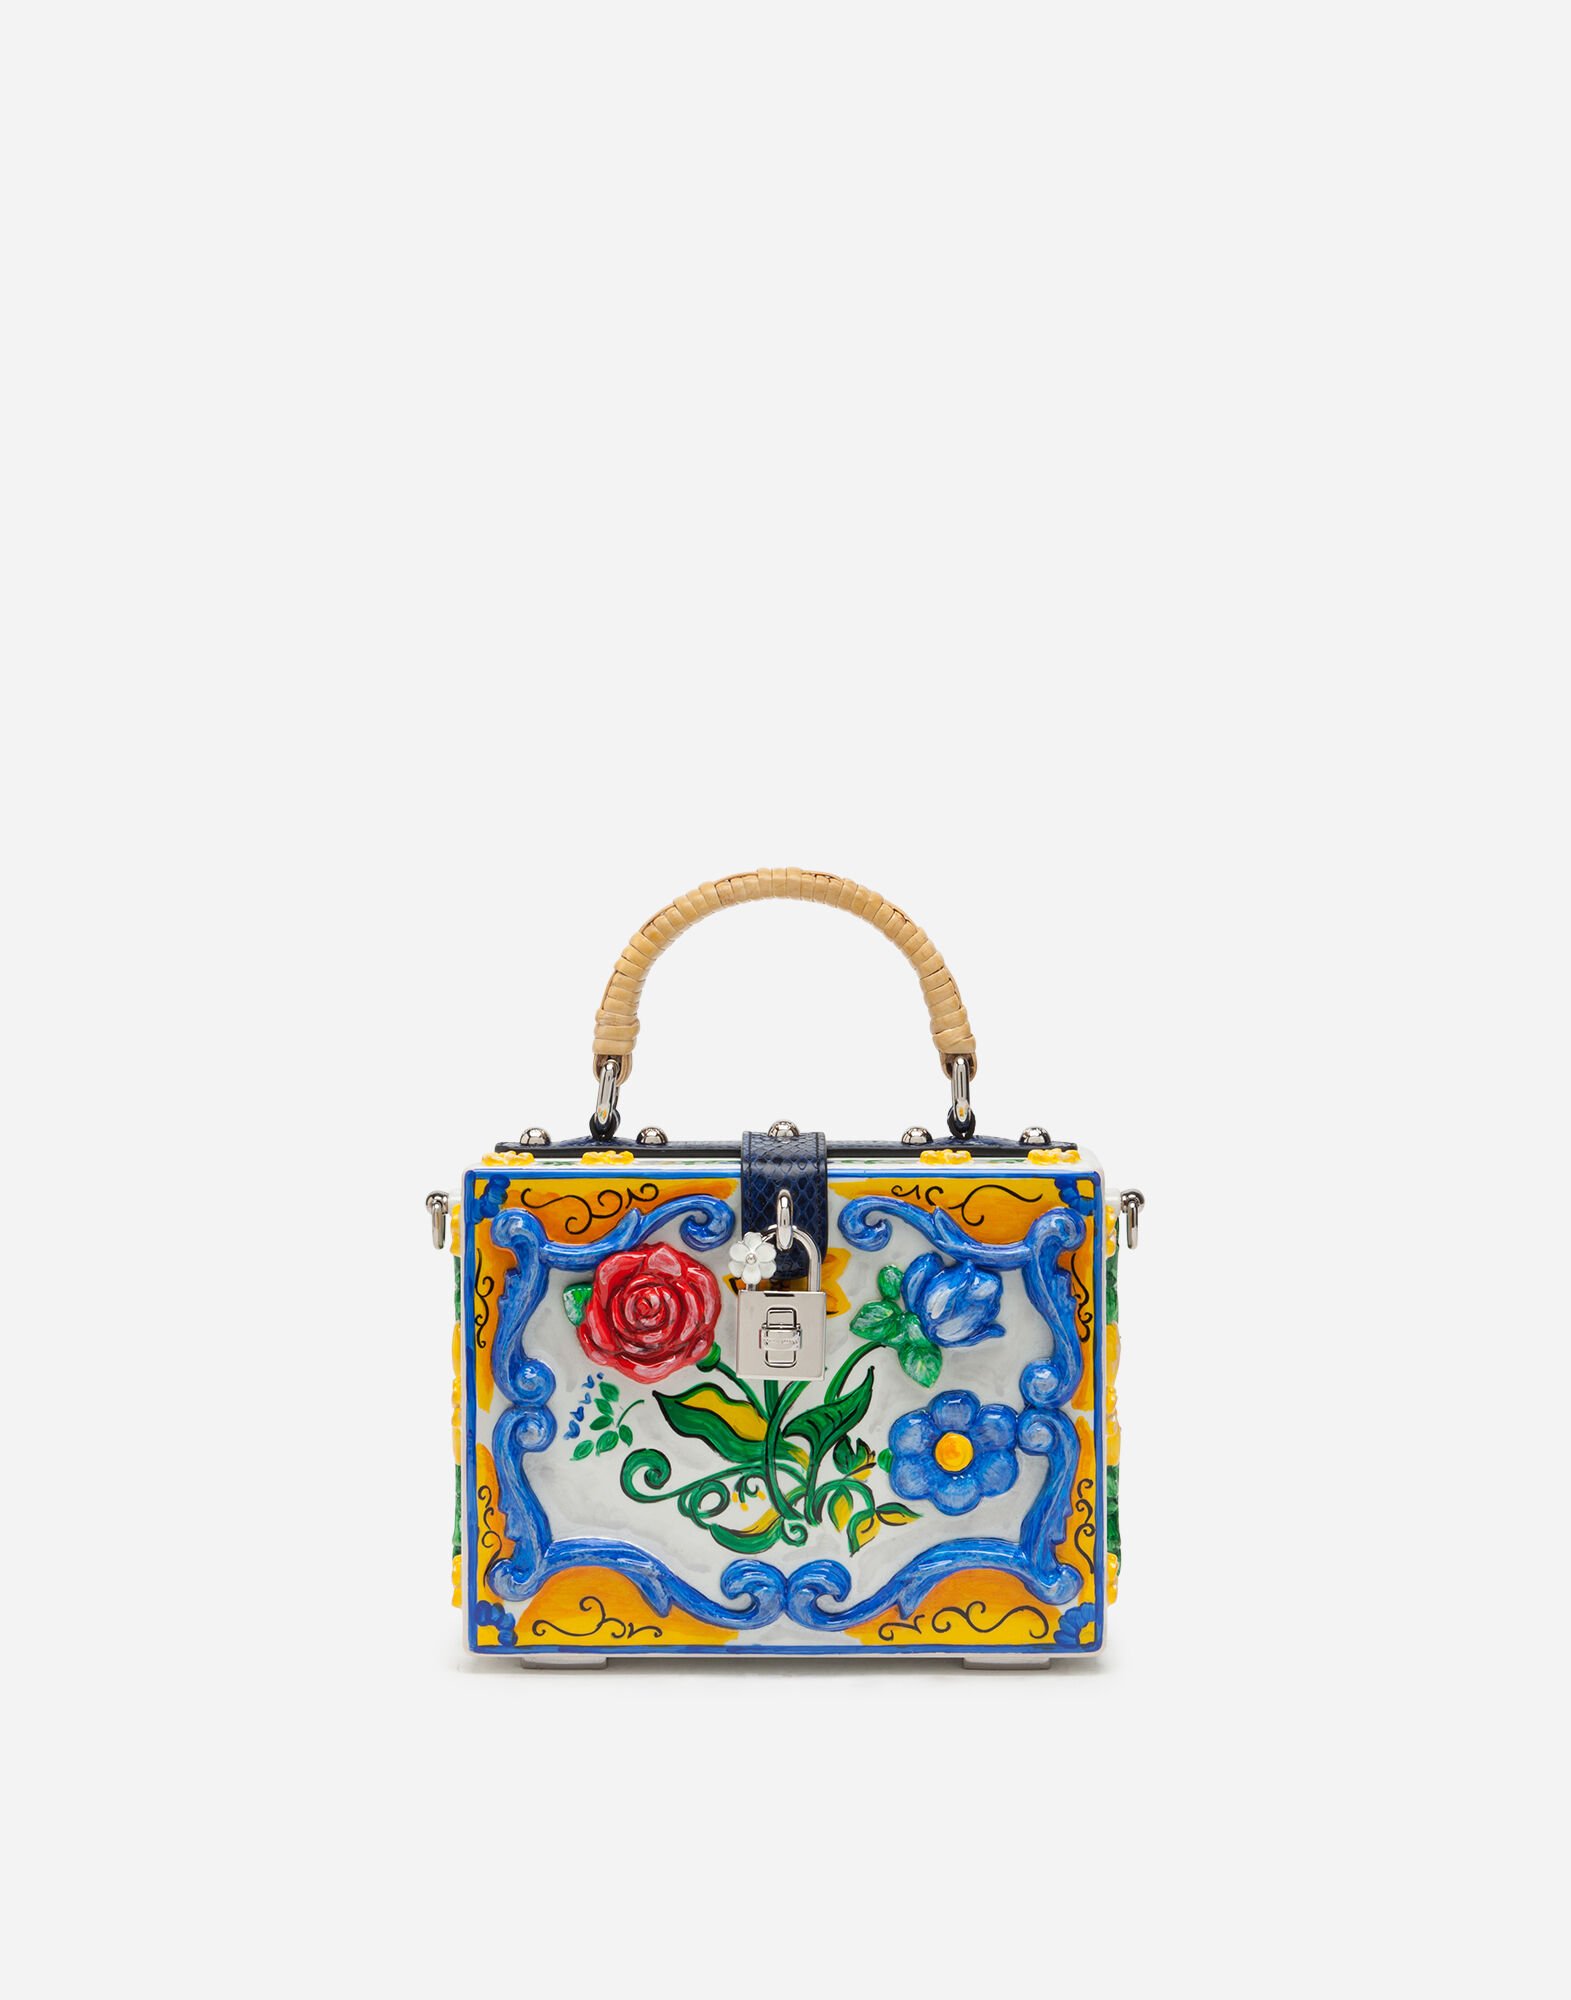 Dolce & Gabbana Tasche Dolce Box aus holz handbemalt majolika Rosa BB2179AW752